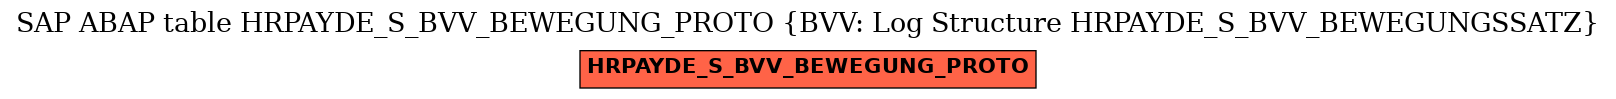 E-R Diagram for table HRPAYDE_S_BVV_BEWEGUNG_PROTO (BVV: Log Structure HRPAYDE_S_BVV_BEWEGUNGSSATZ)